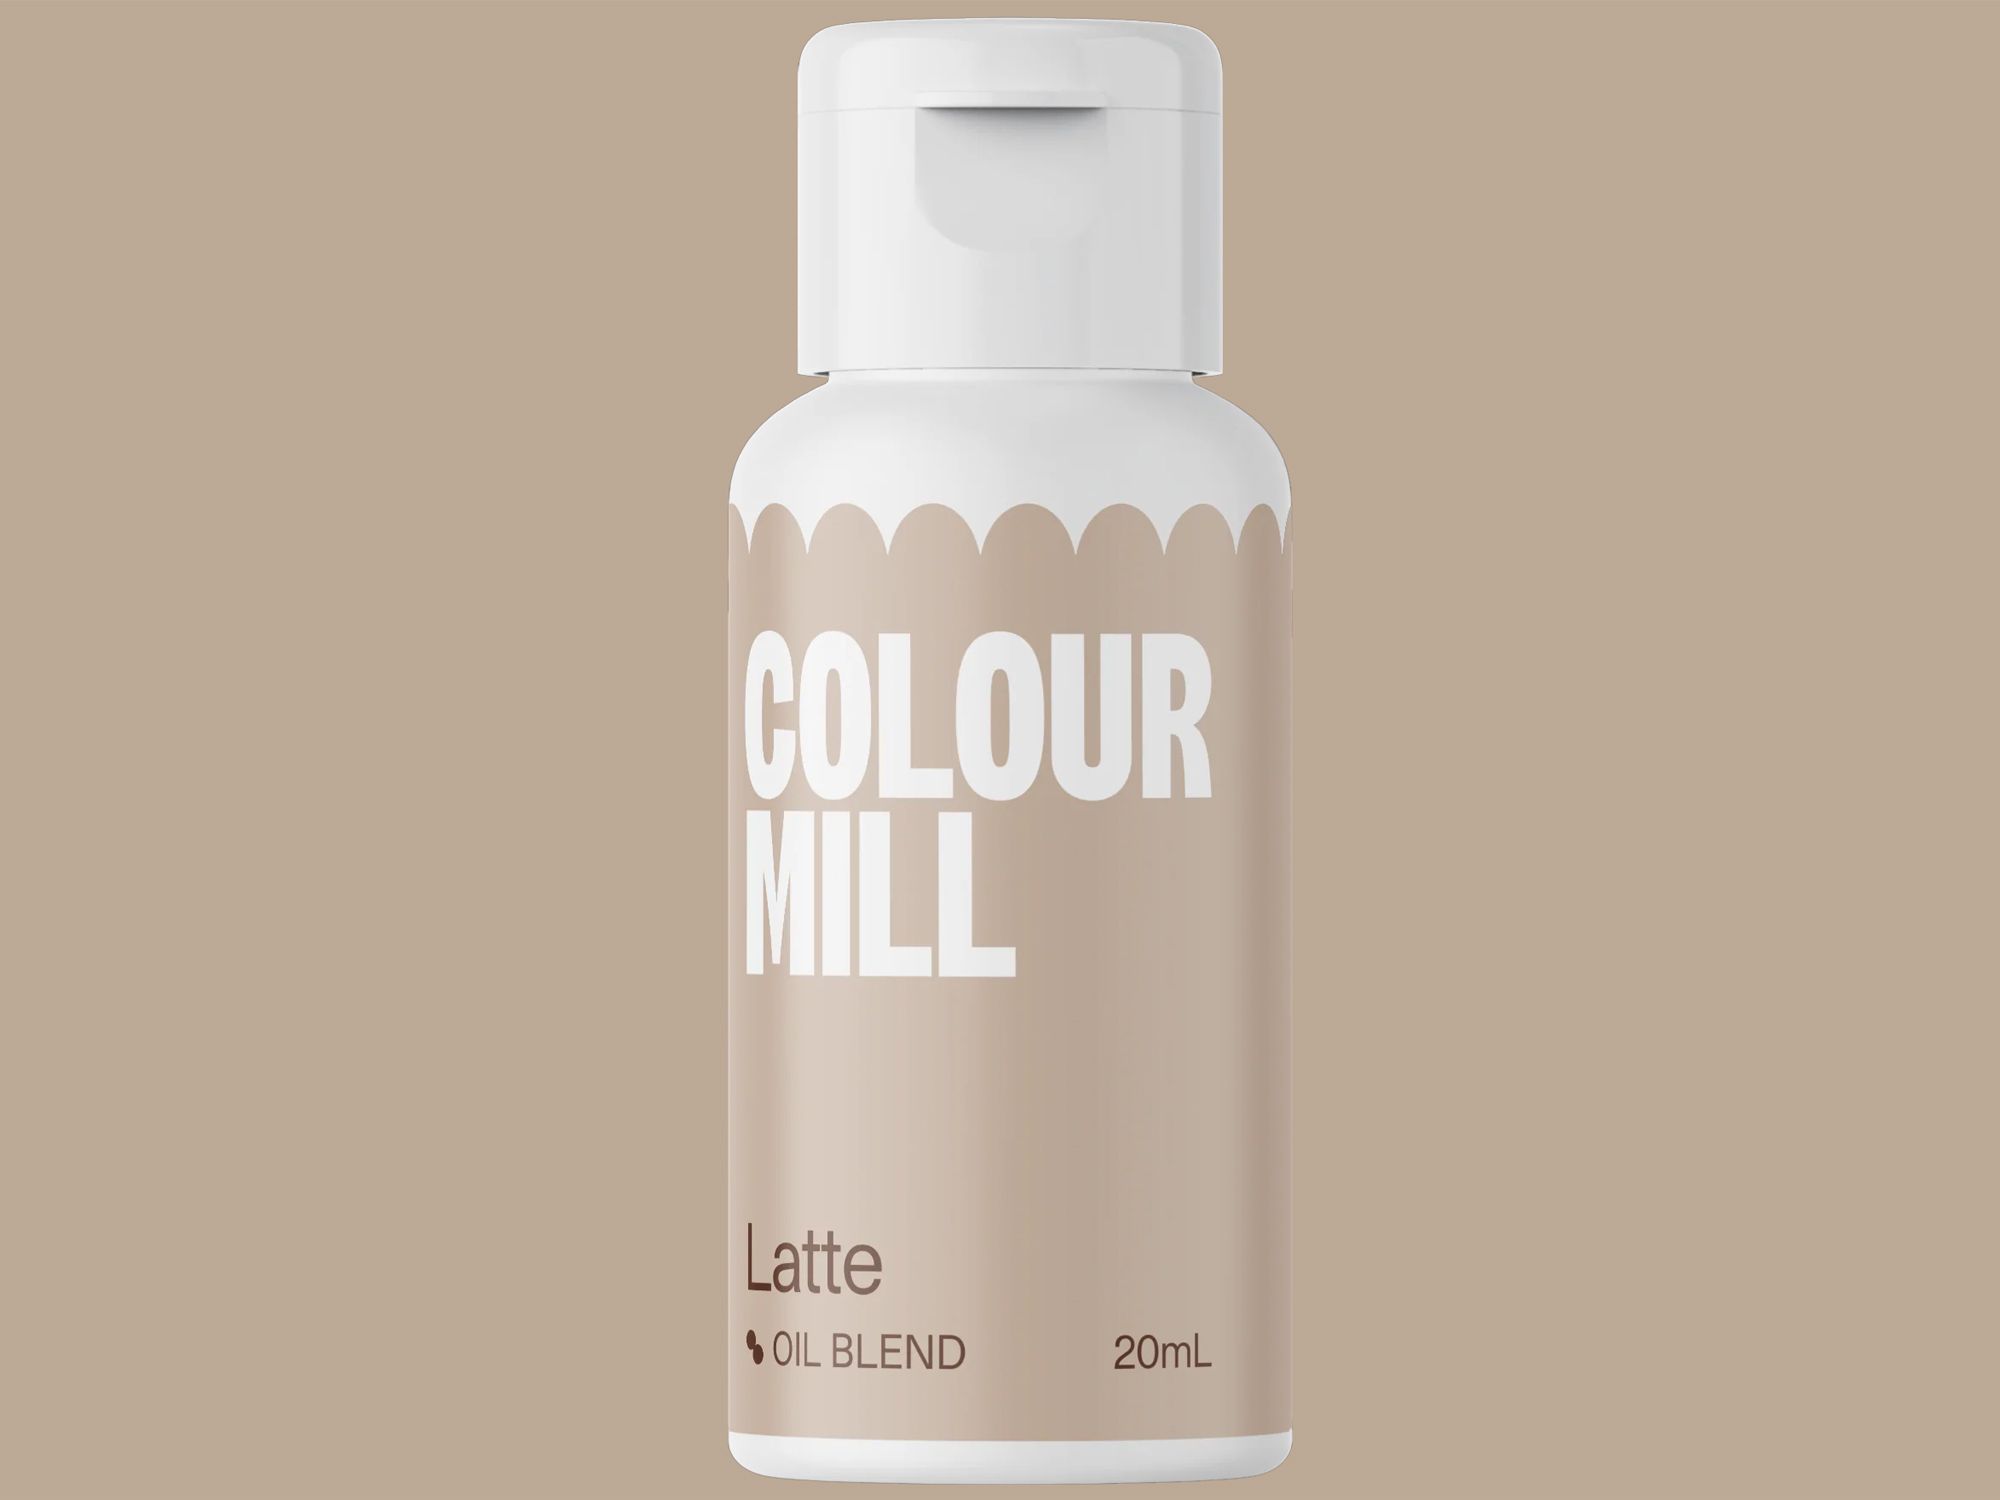 Colour Mill Latte (Oil Blend) 20ml